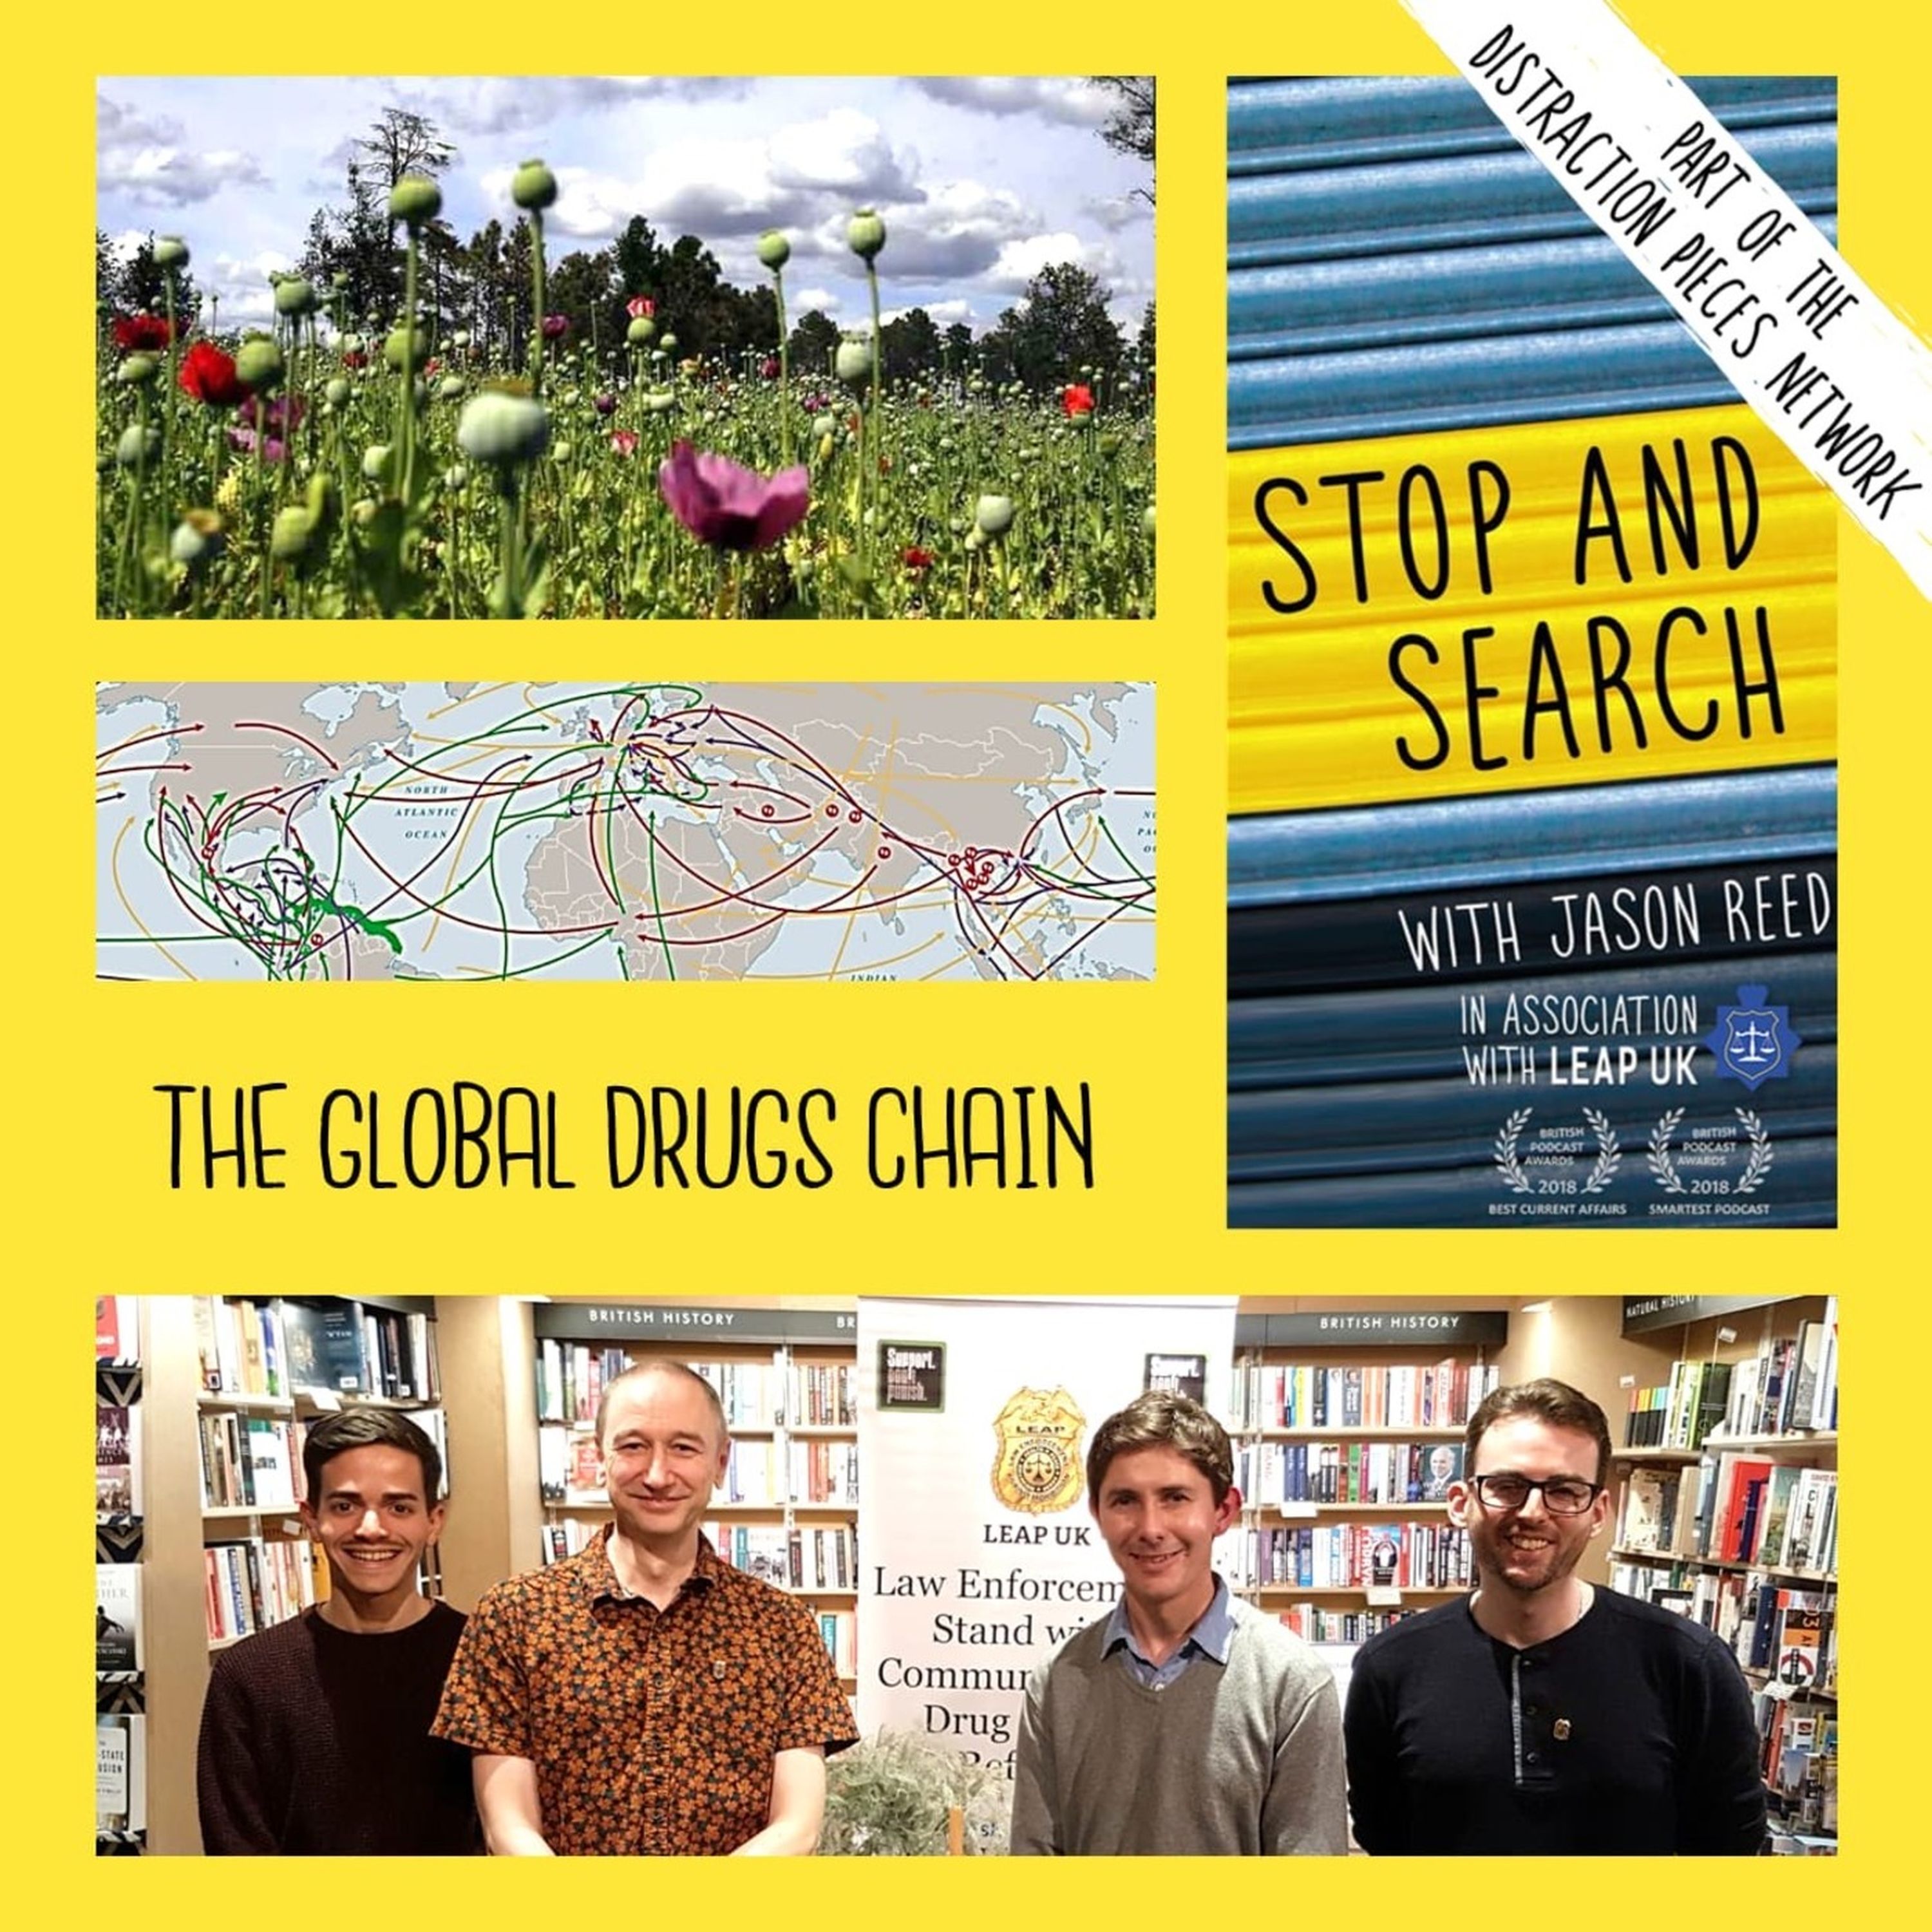 The Global Drugs Chain